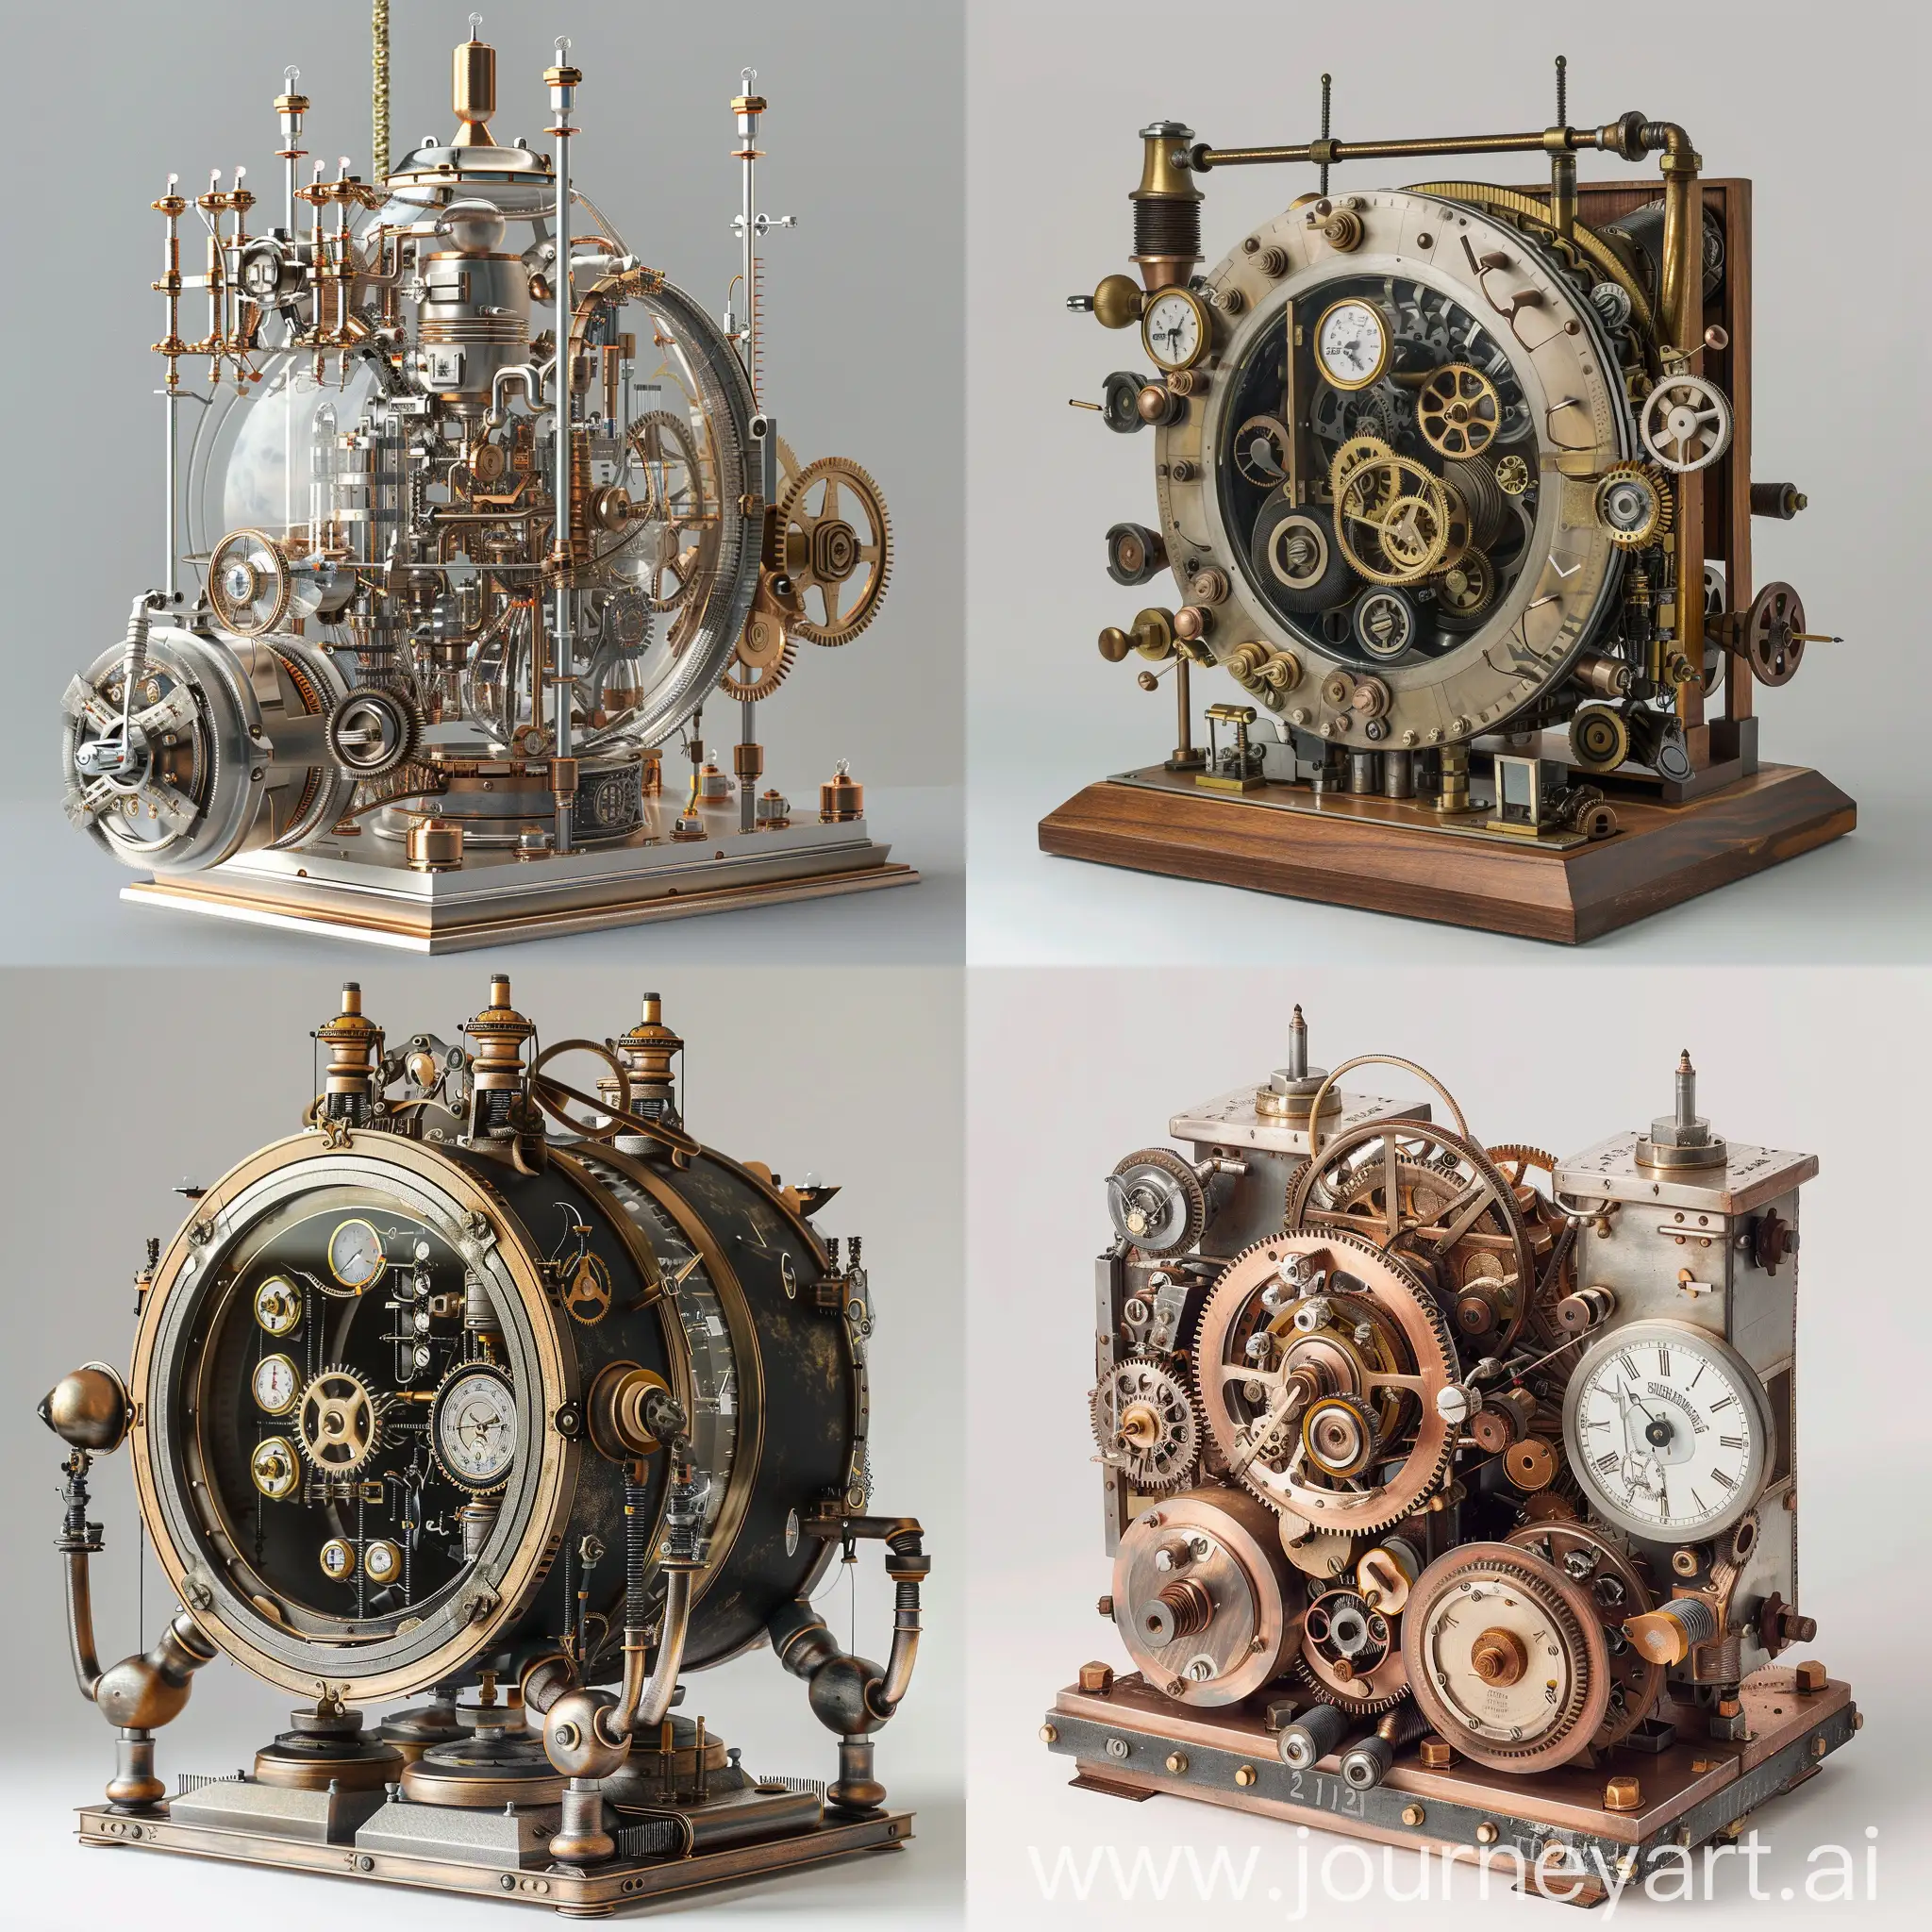 time machine with complex mechanics